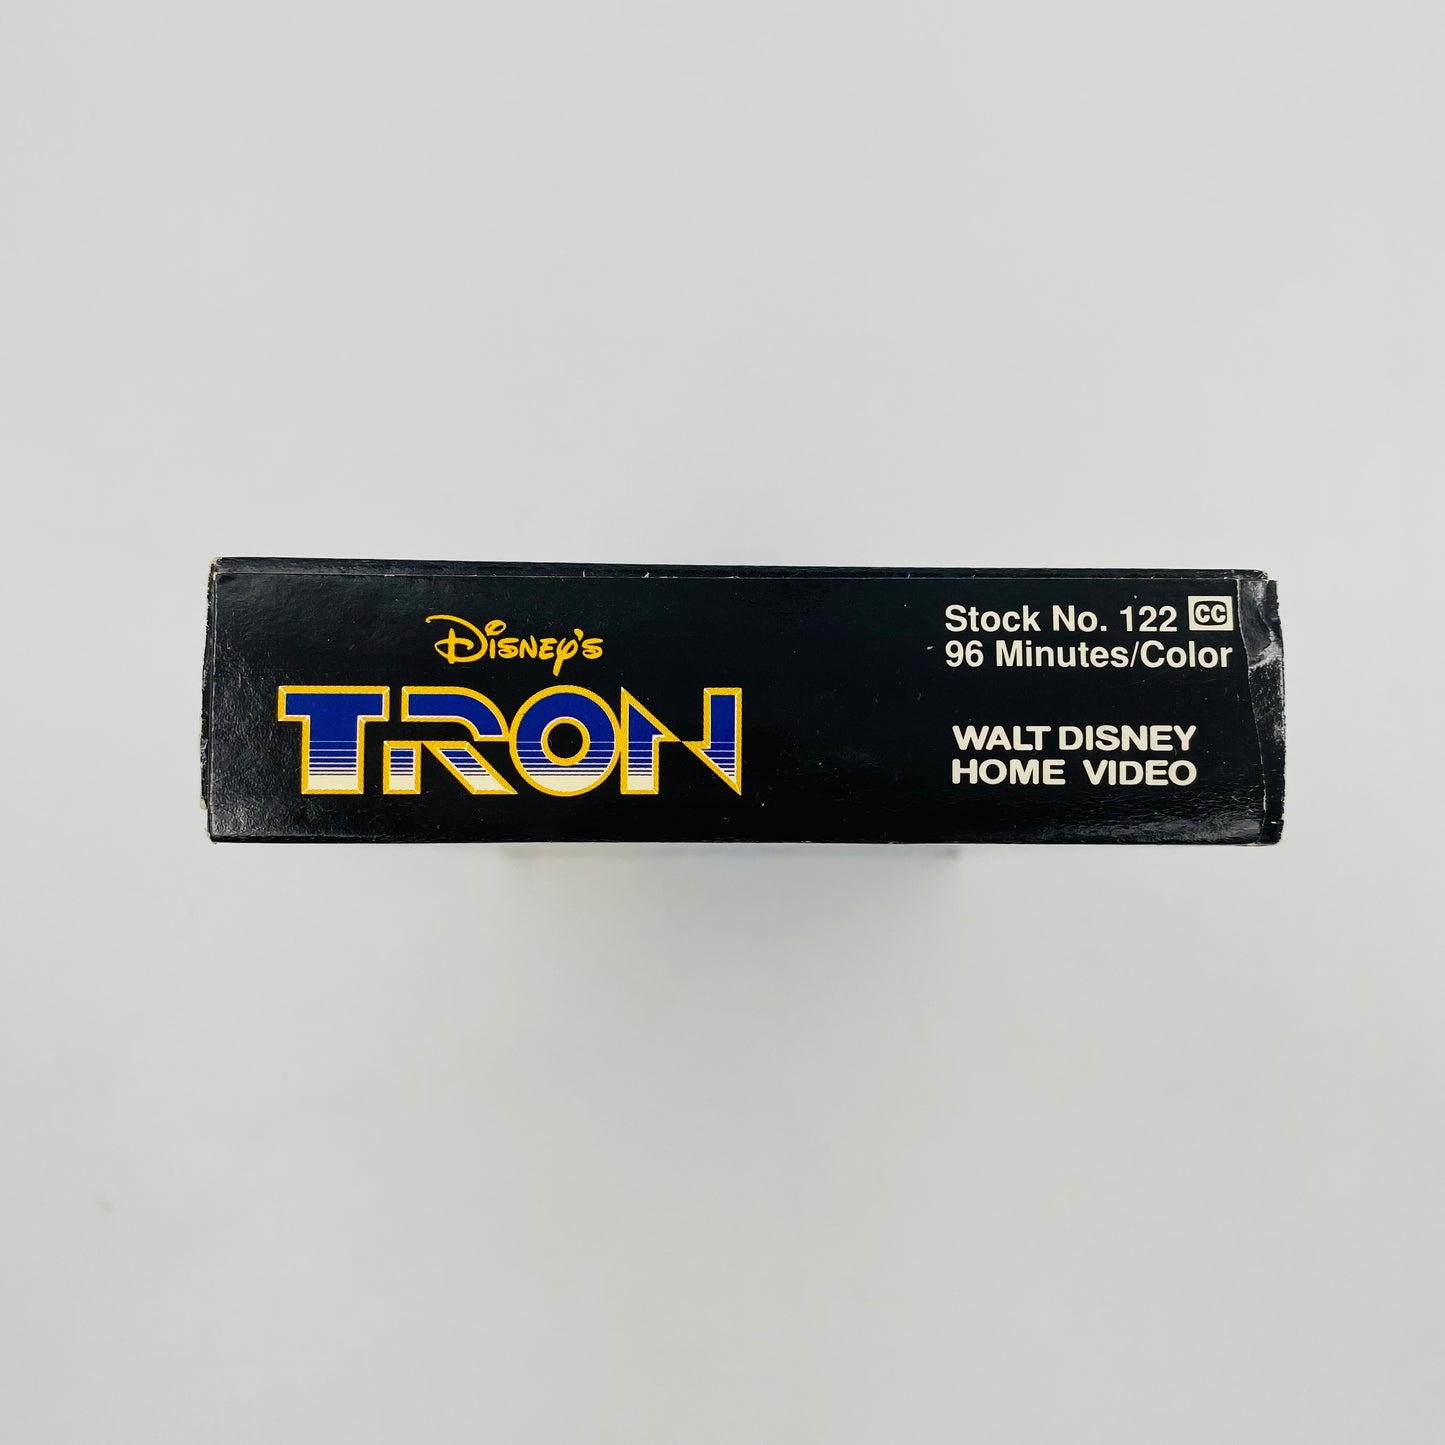 Tron VHS tape (1995) Walt Disney Home Video